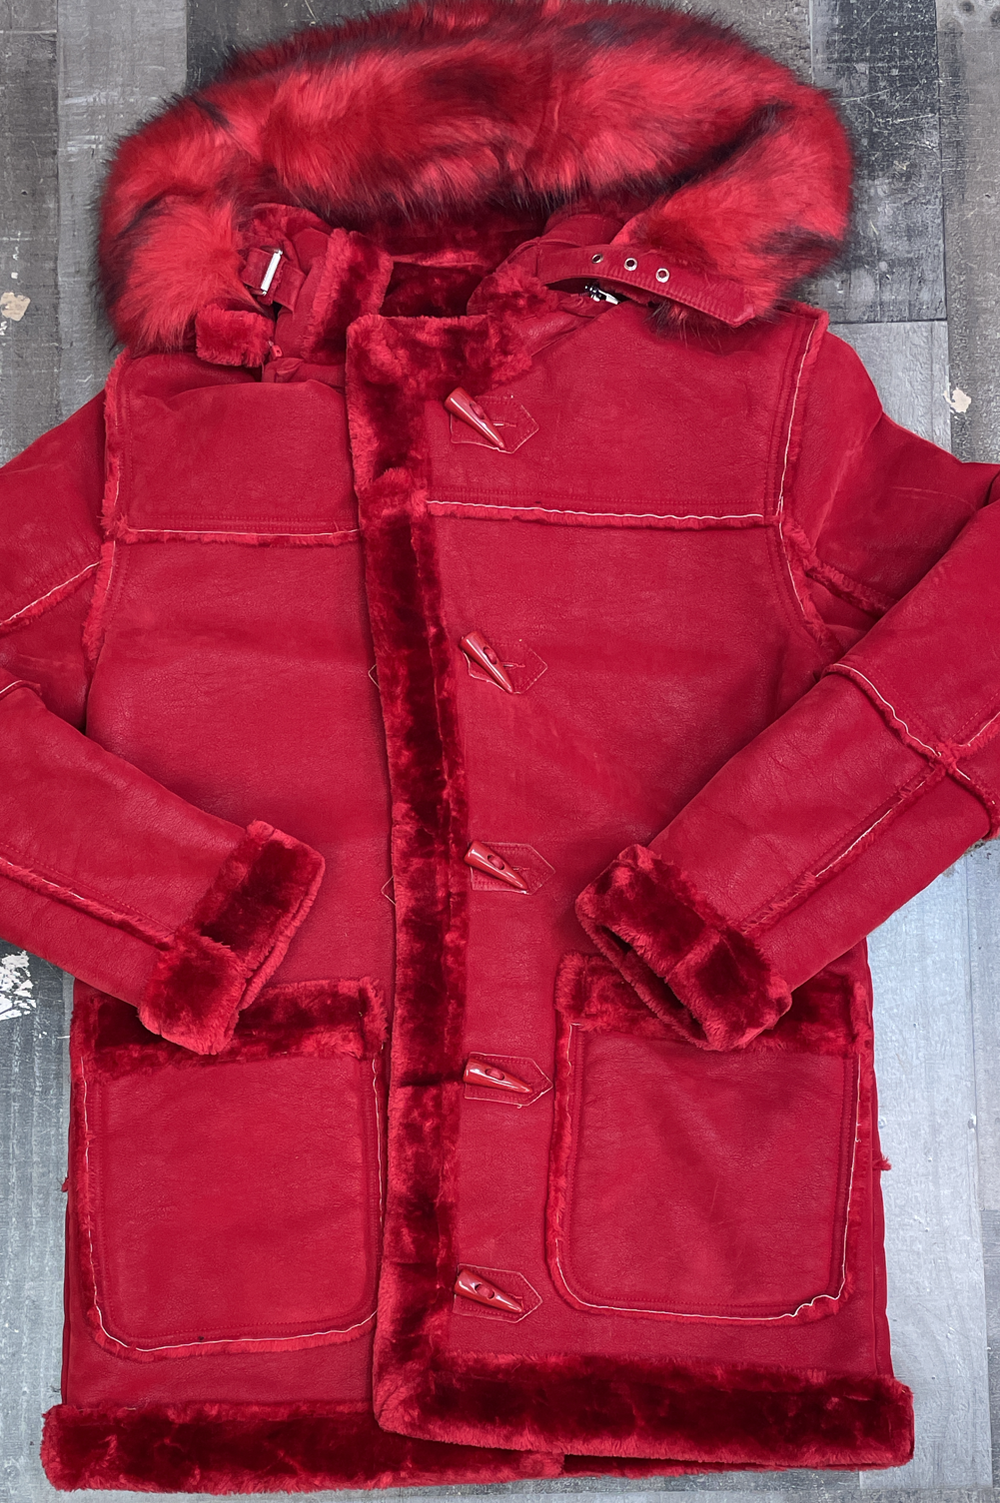 Jordan craig- shearling jacket (red)